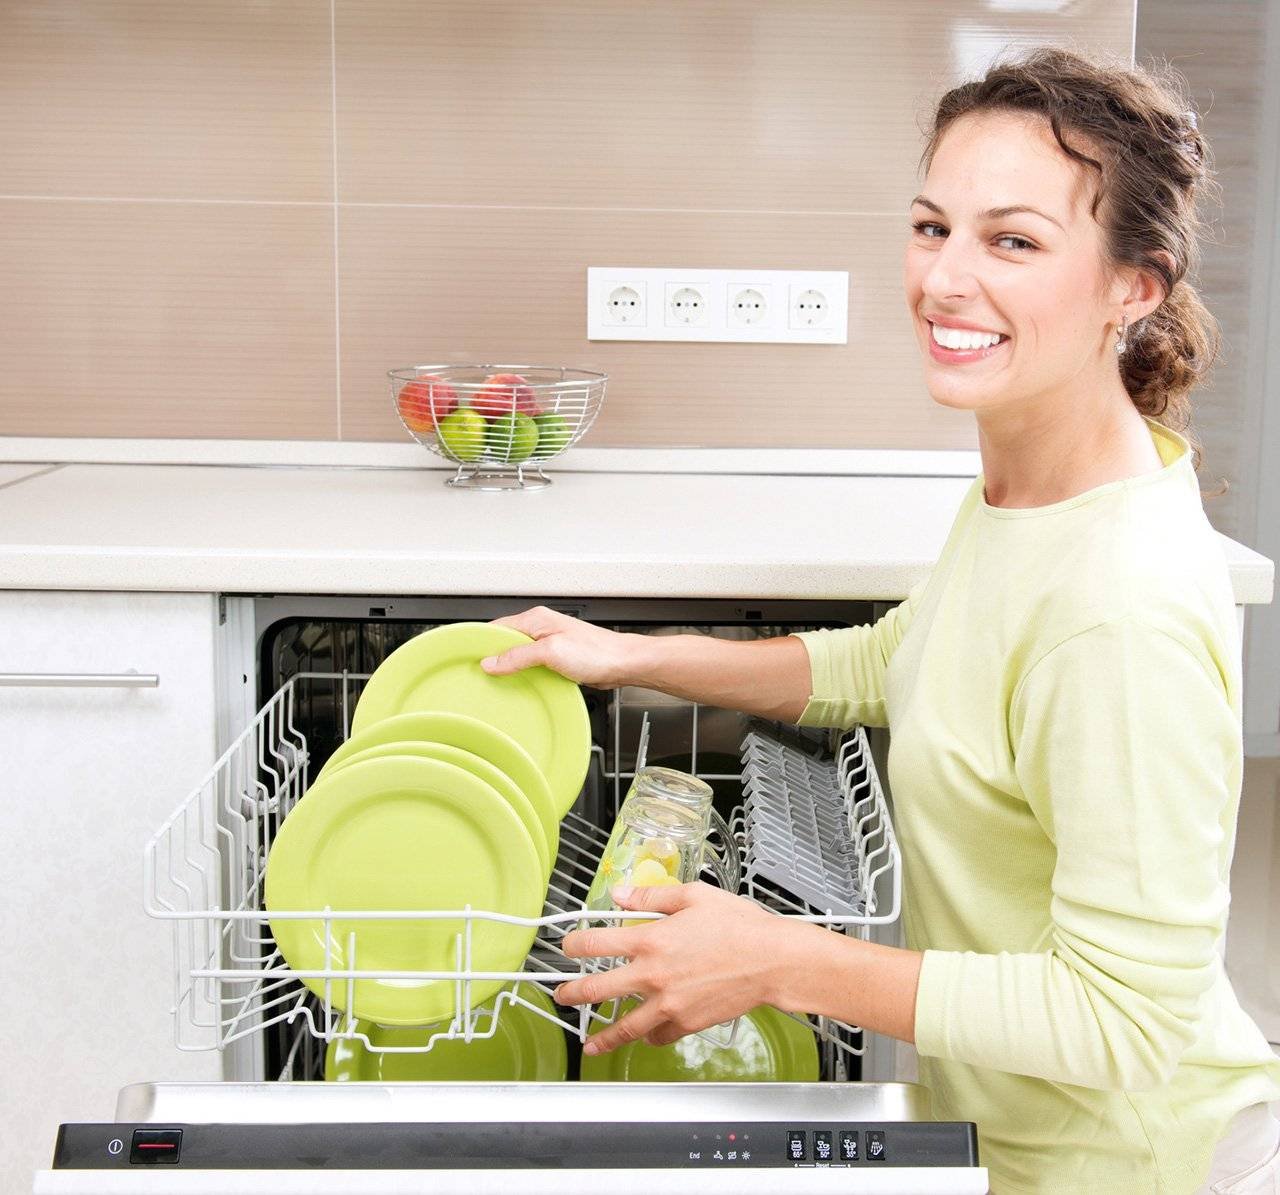 Моющую машинку посудомоечную. Для посудомоечных машин. Посудомойка женщина. Женщина и посудомоечная машина. Посуда в посудомойке.